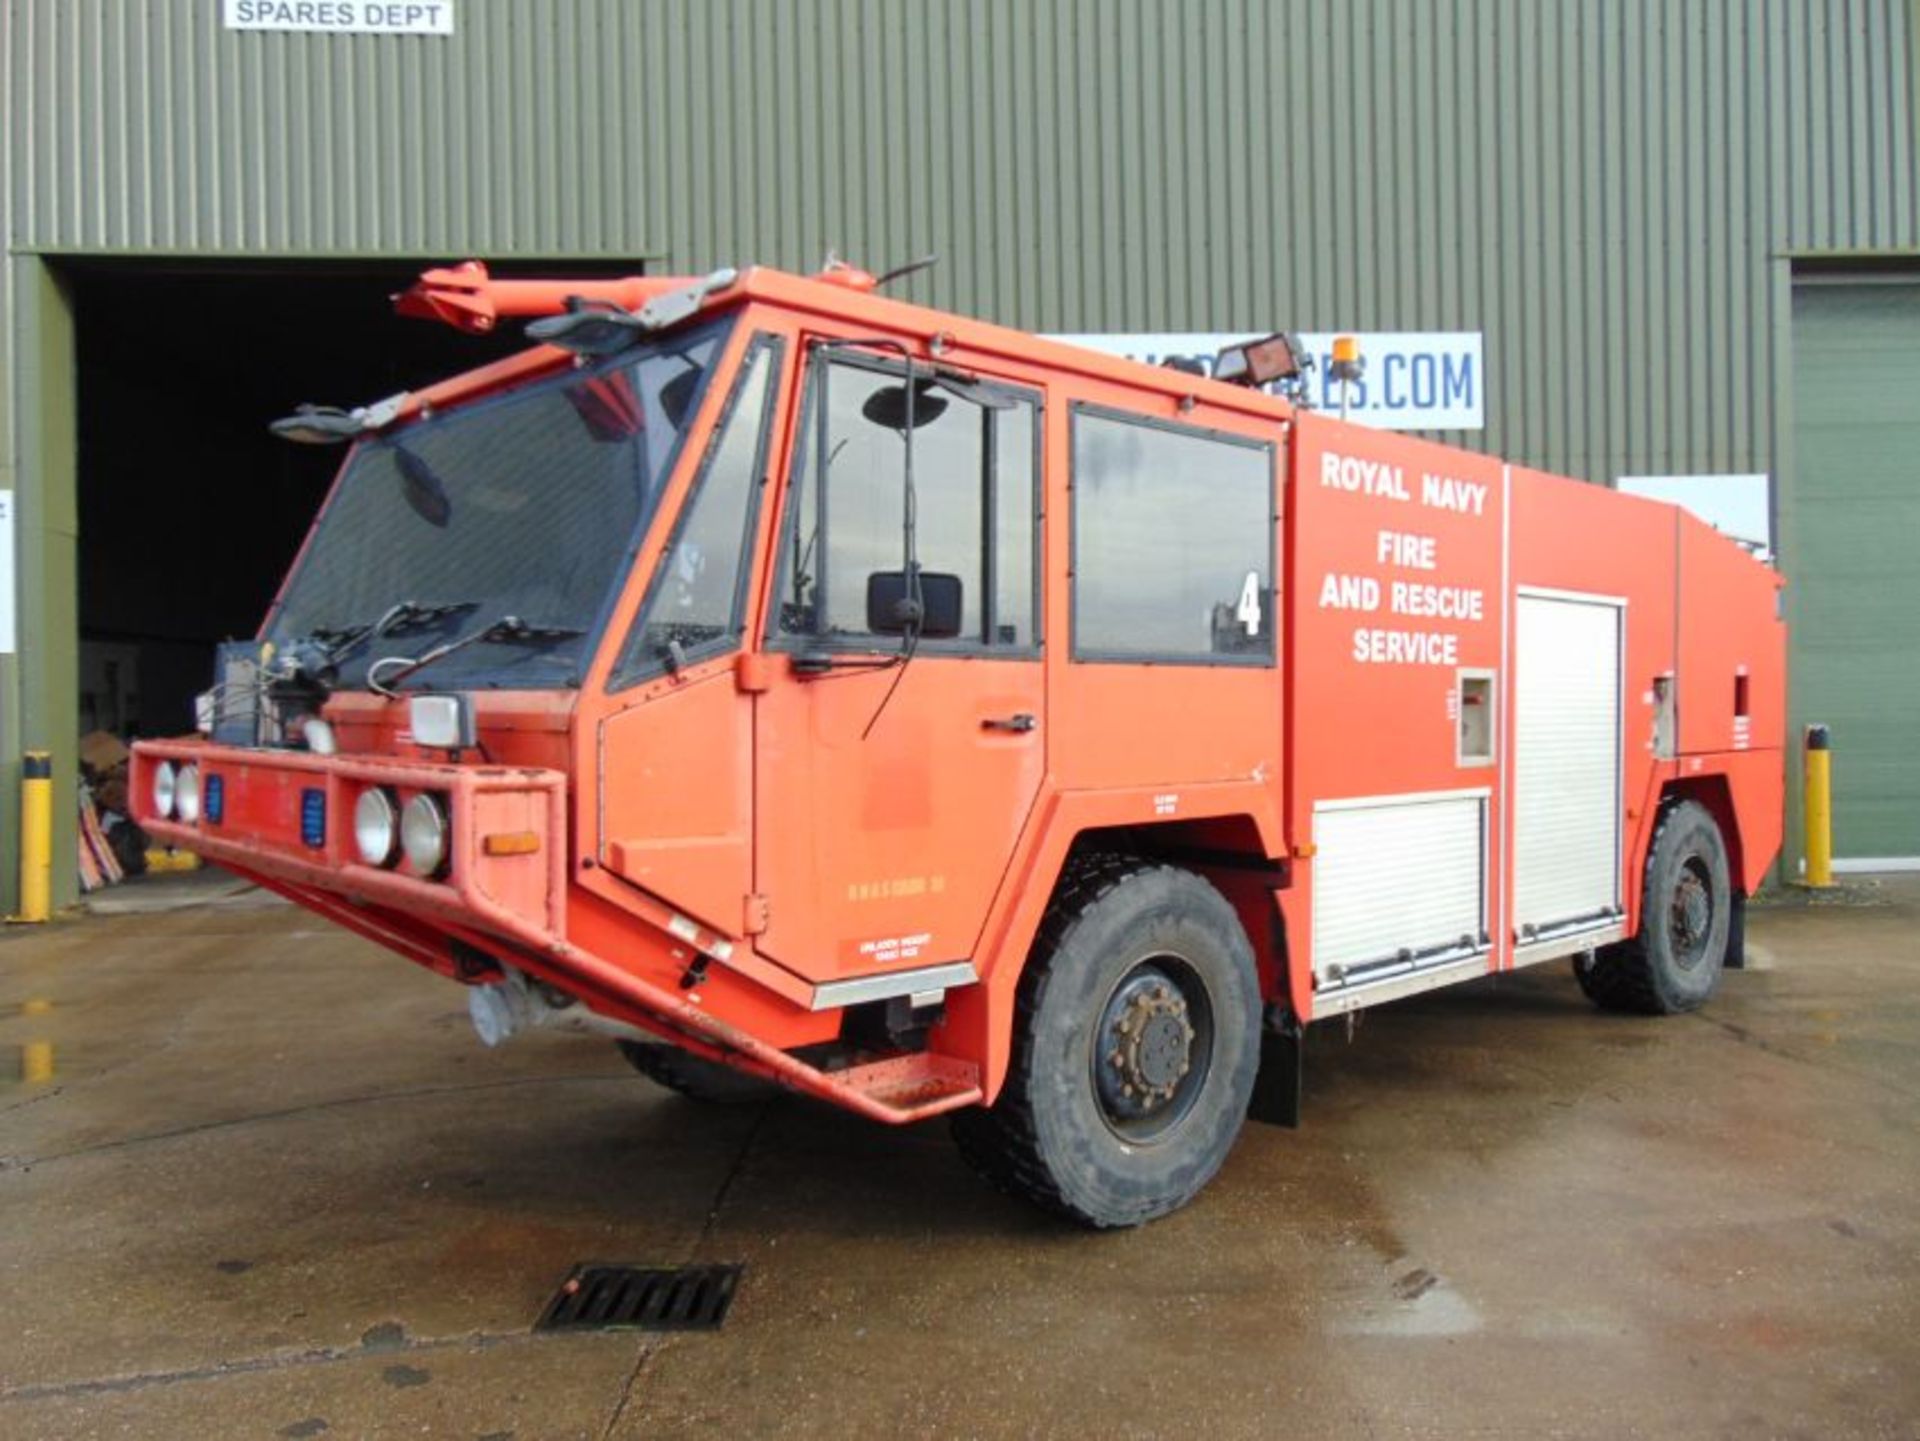 Alvis Unipower 4x4 Rapid Intervention Vehicle RIV Fire Truck ONLY 3,192 Km!